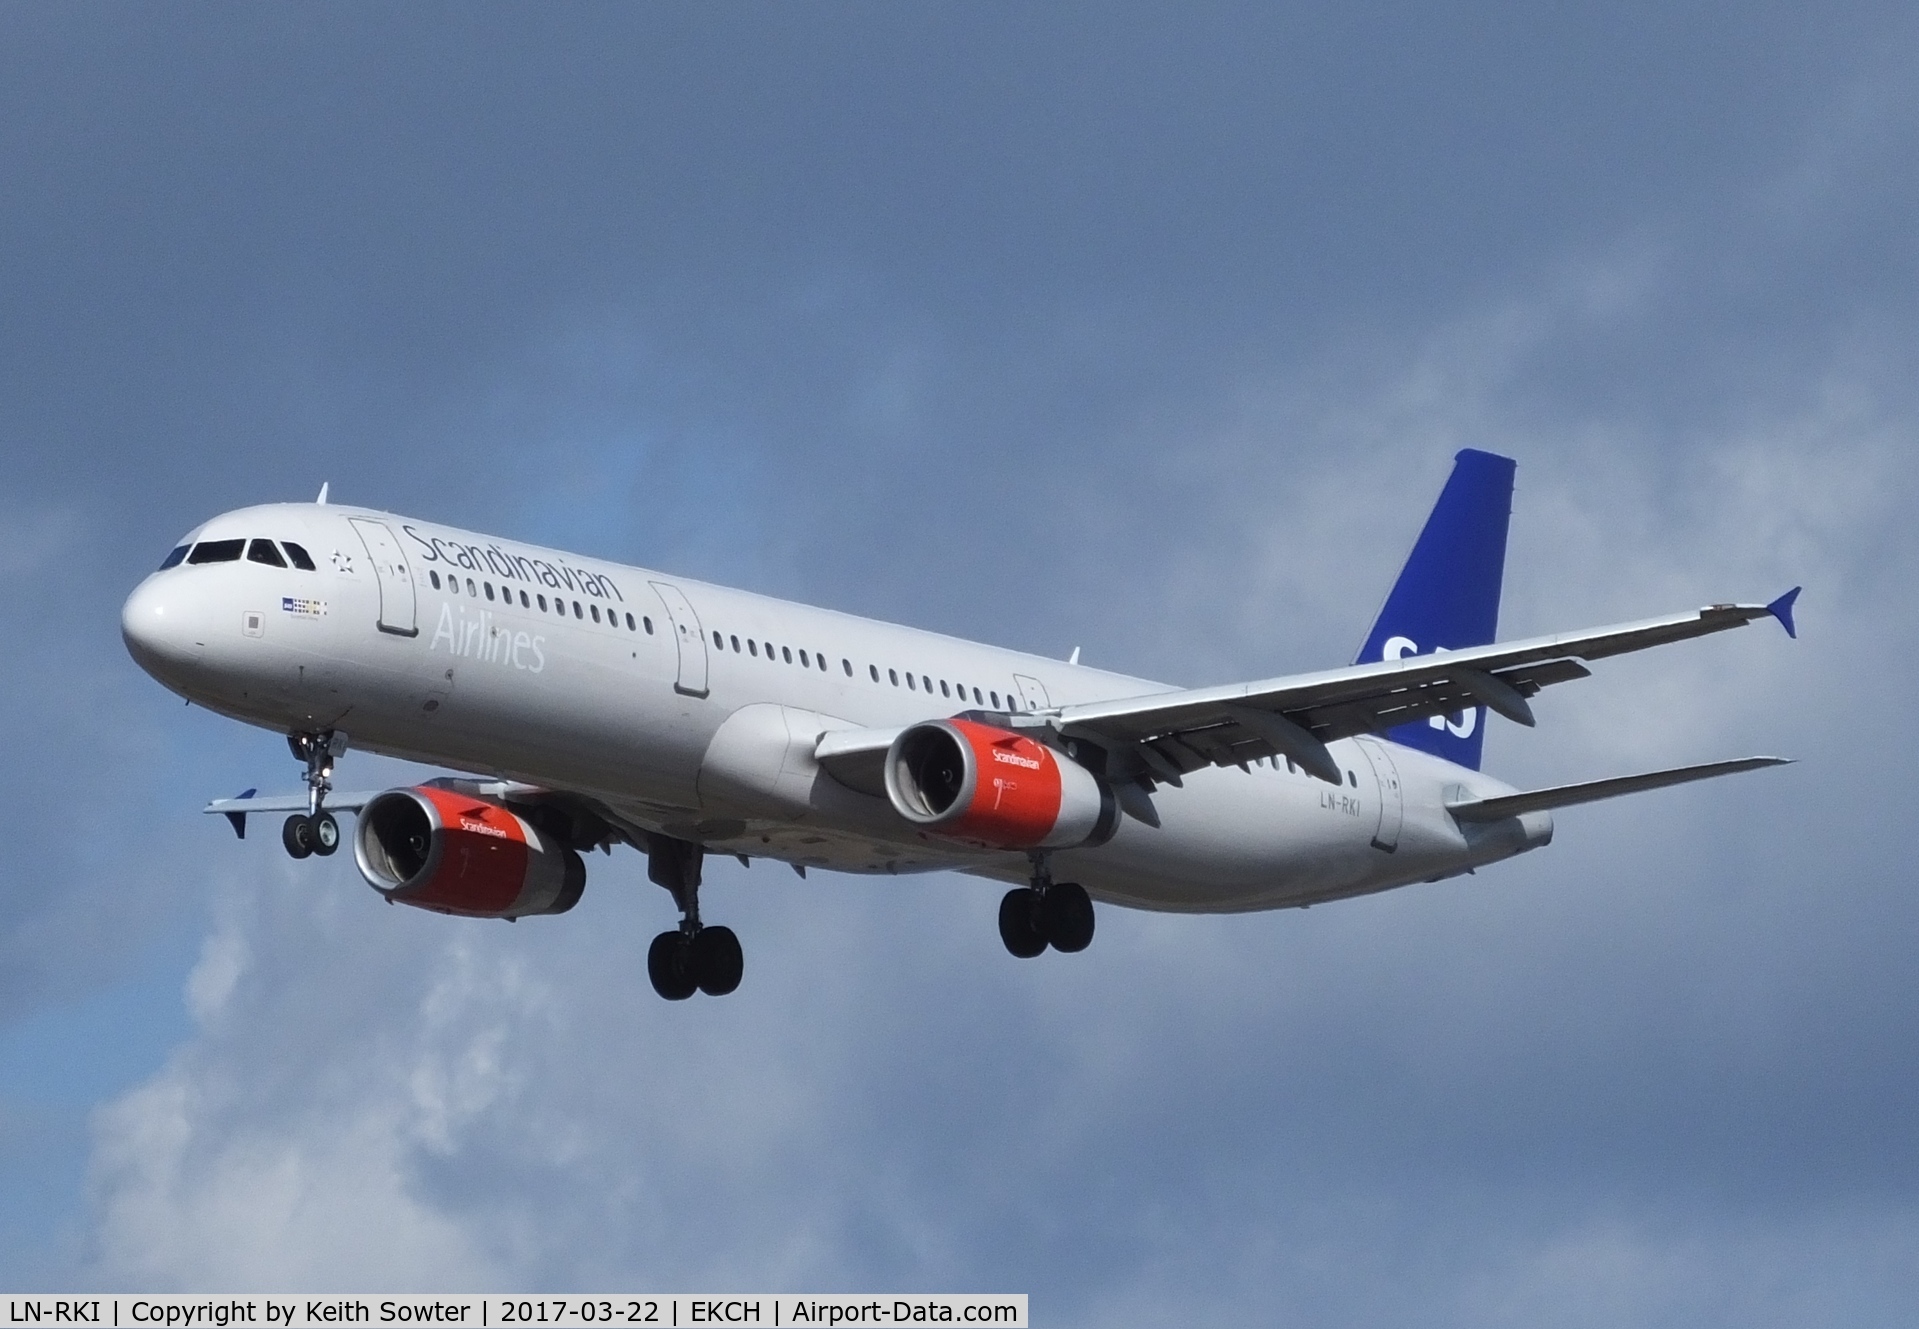 LN-RKI, 2002 Airbus A321-232 C/N 1817, Short finals to land at Copenhagen